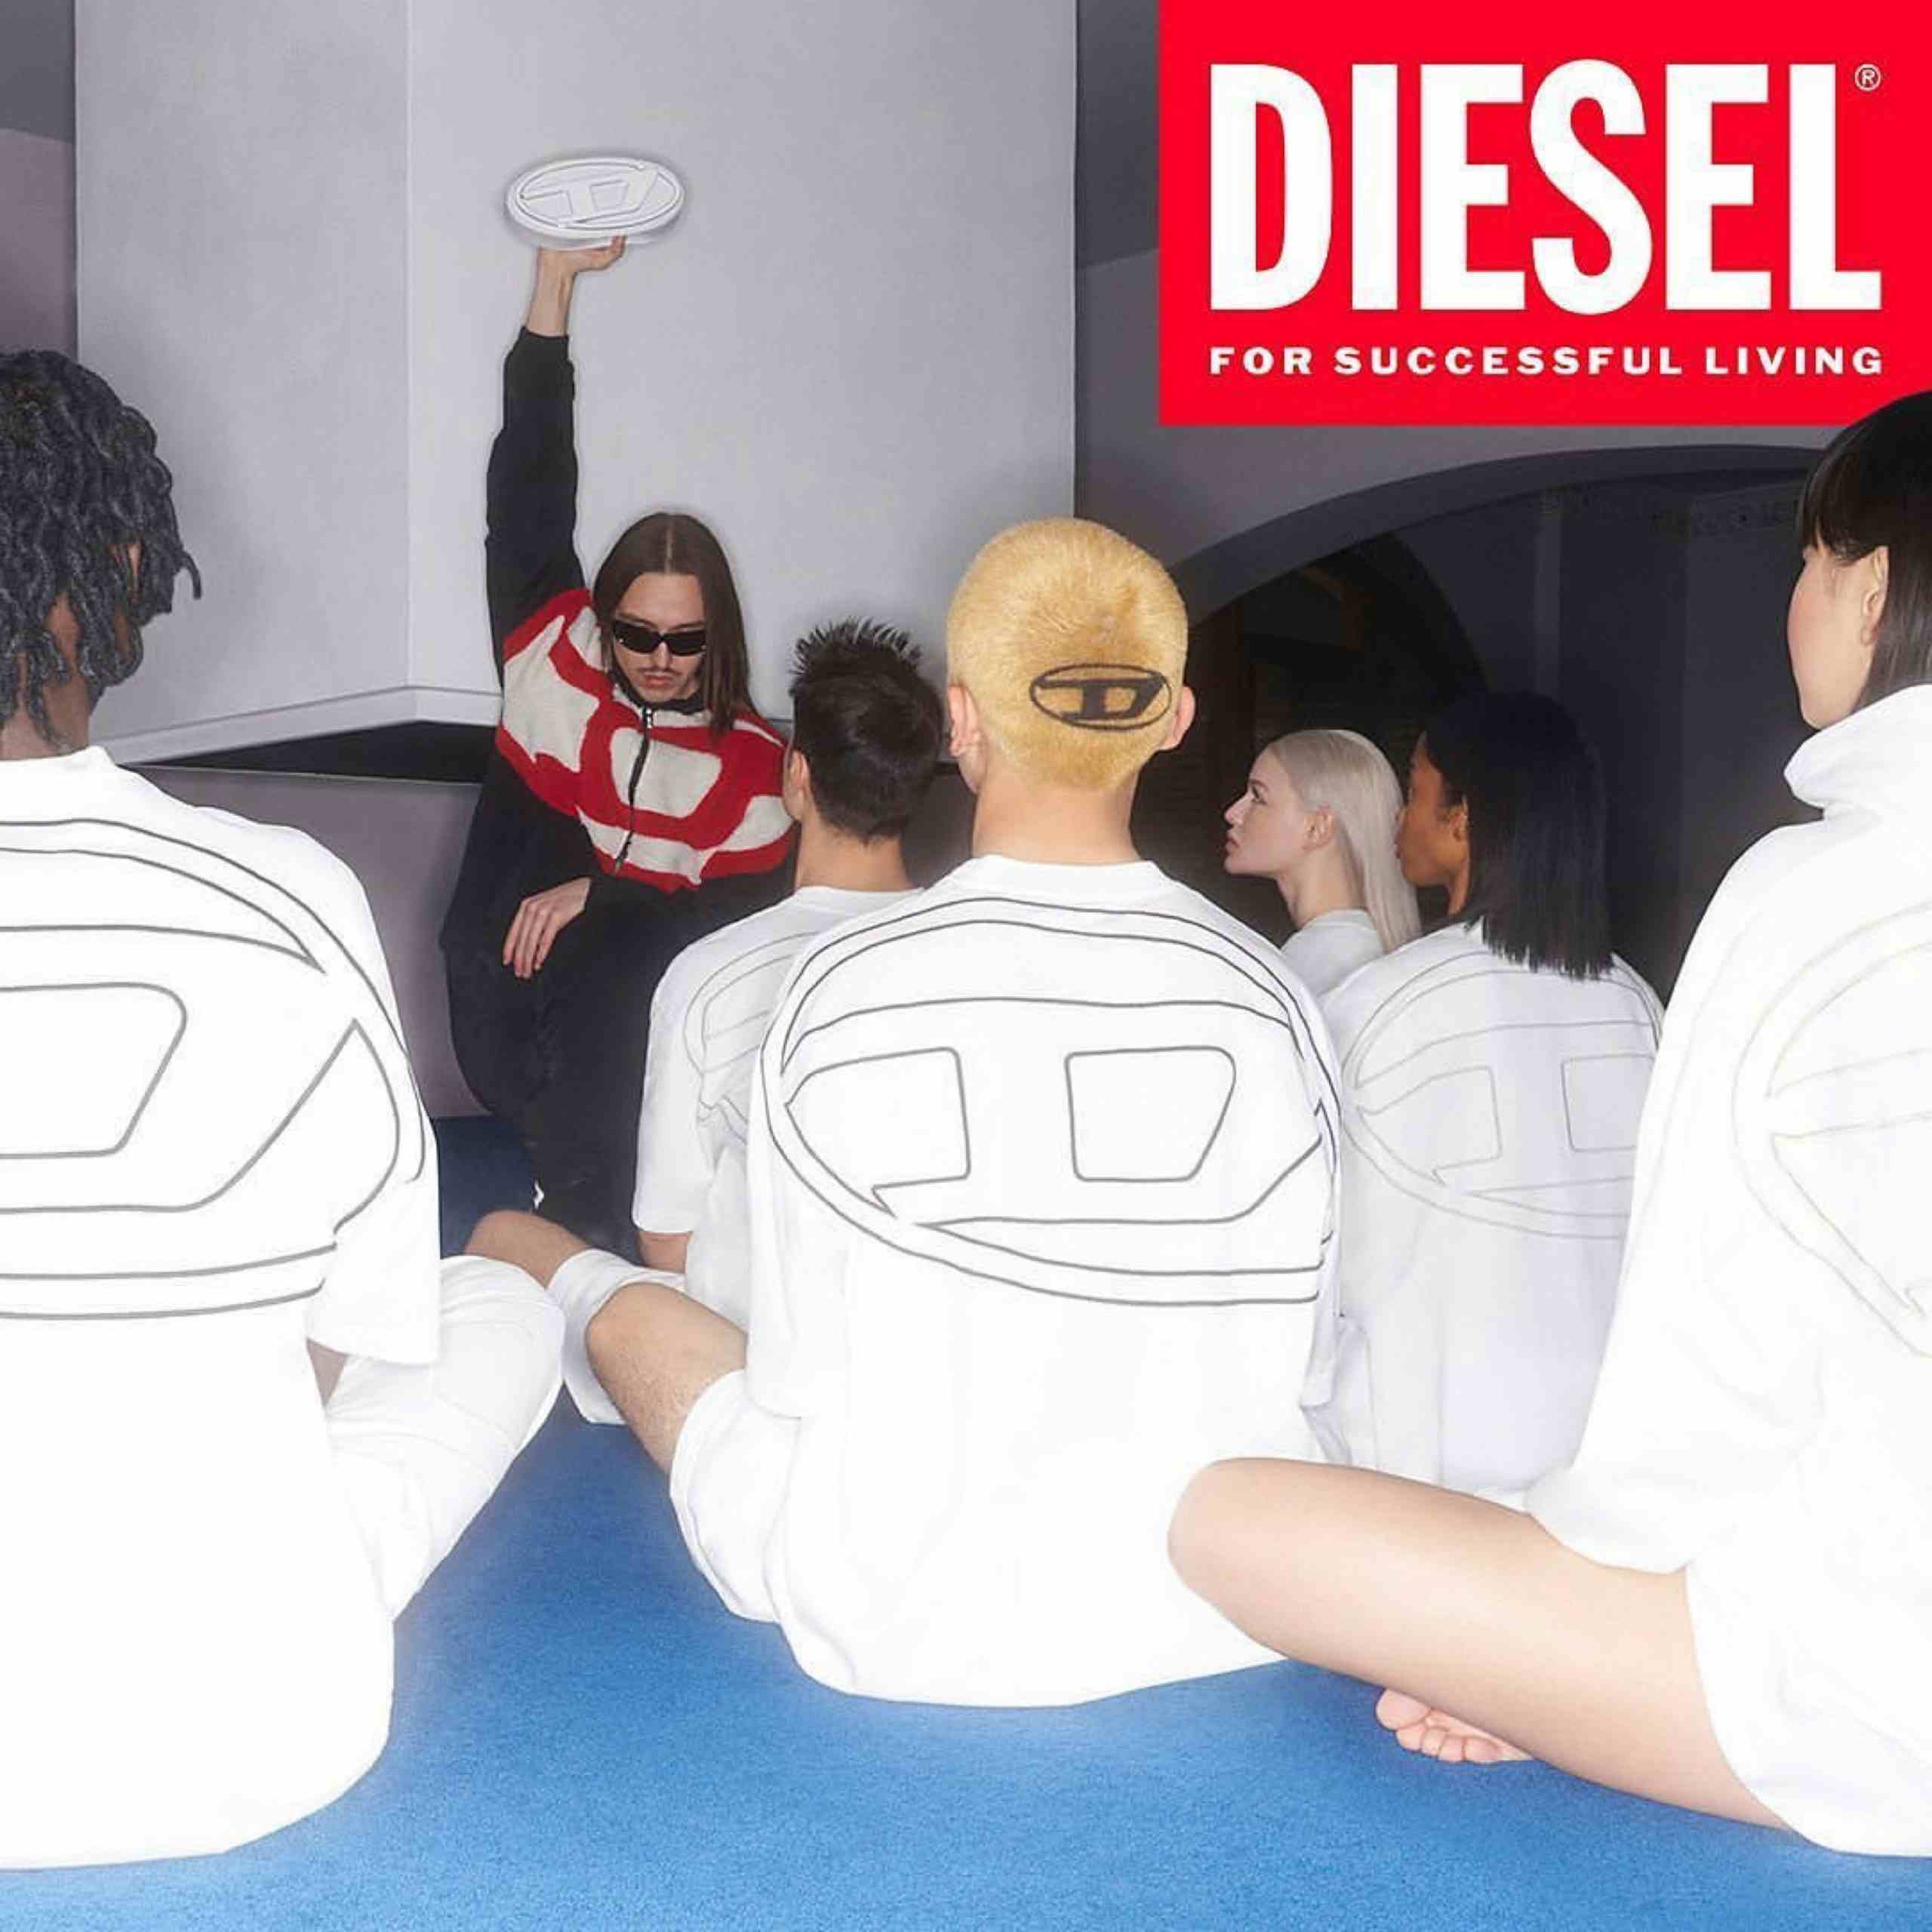 DIESEL - Oval D - Prefall '23 Campaign
Photographer: Marili Andre
Model: Tommy CahWorld
Stylist: Ursina Gysi
